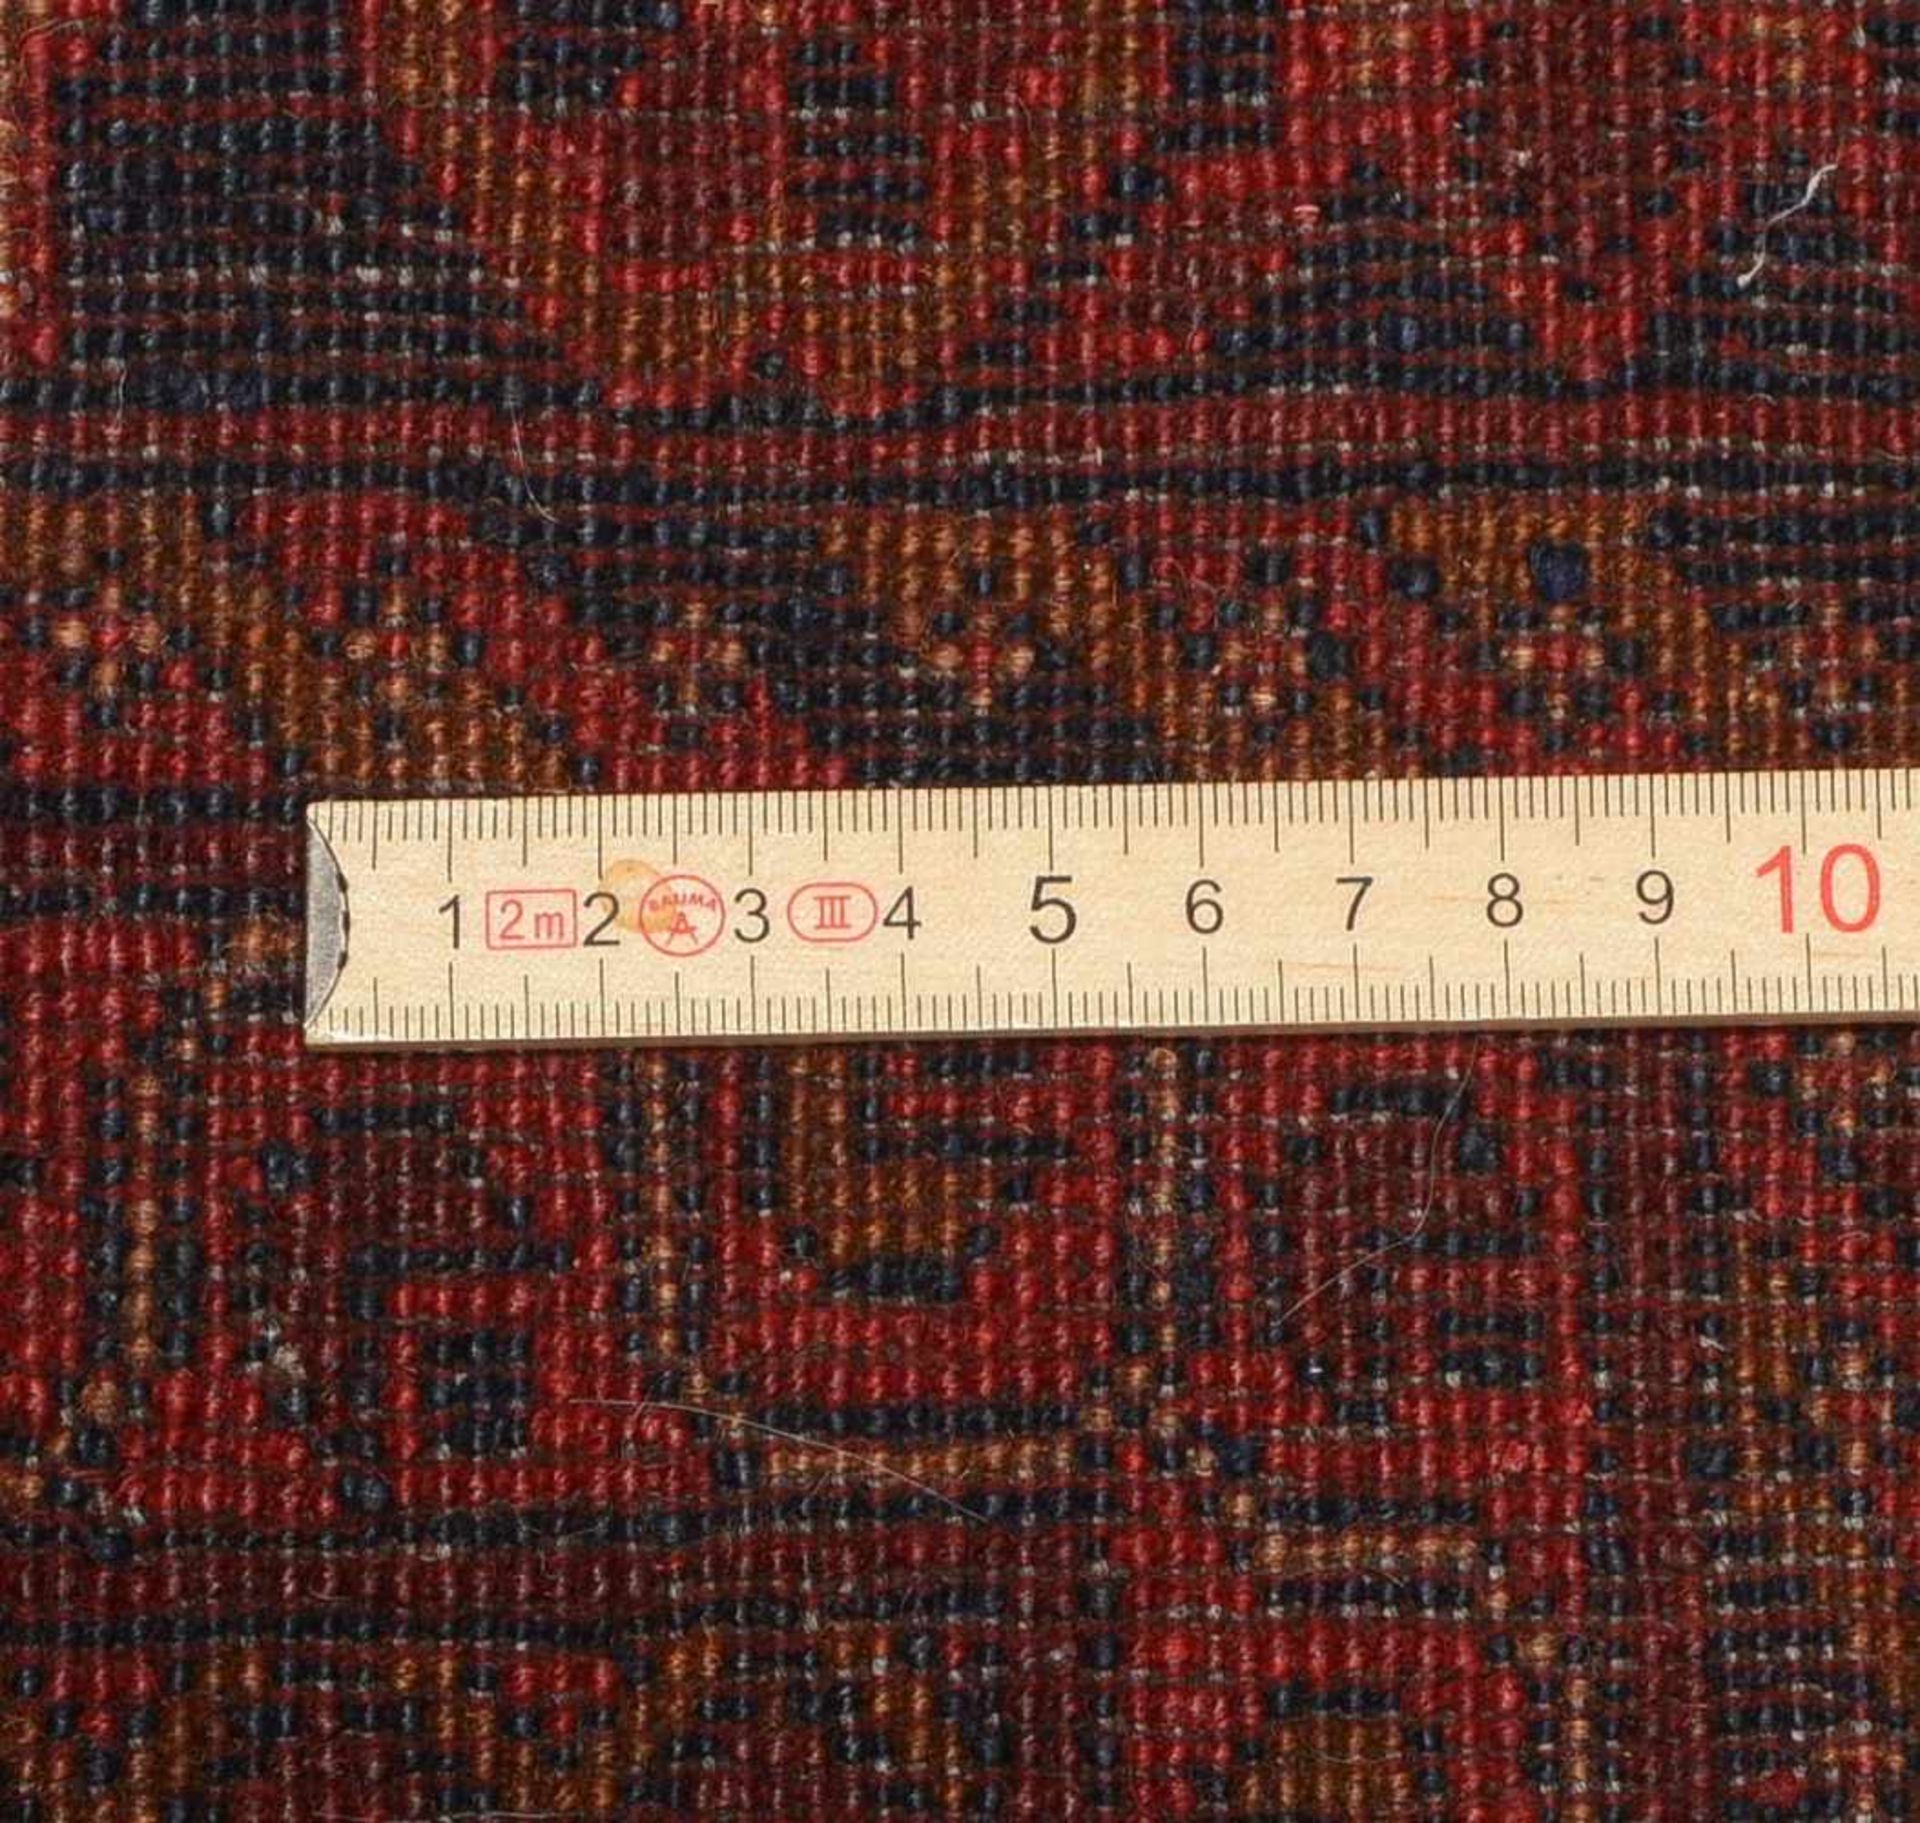 Orientteppich, ringsum komplett, Flor in gutem Zustand; Maße 196 x 129 cm - Bild 3 aus 3